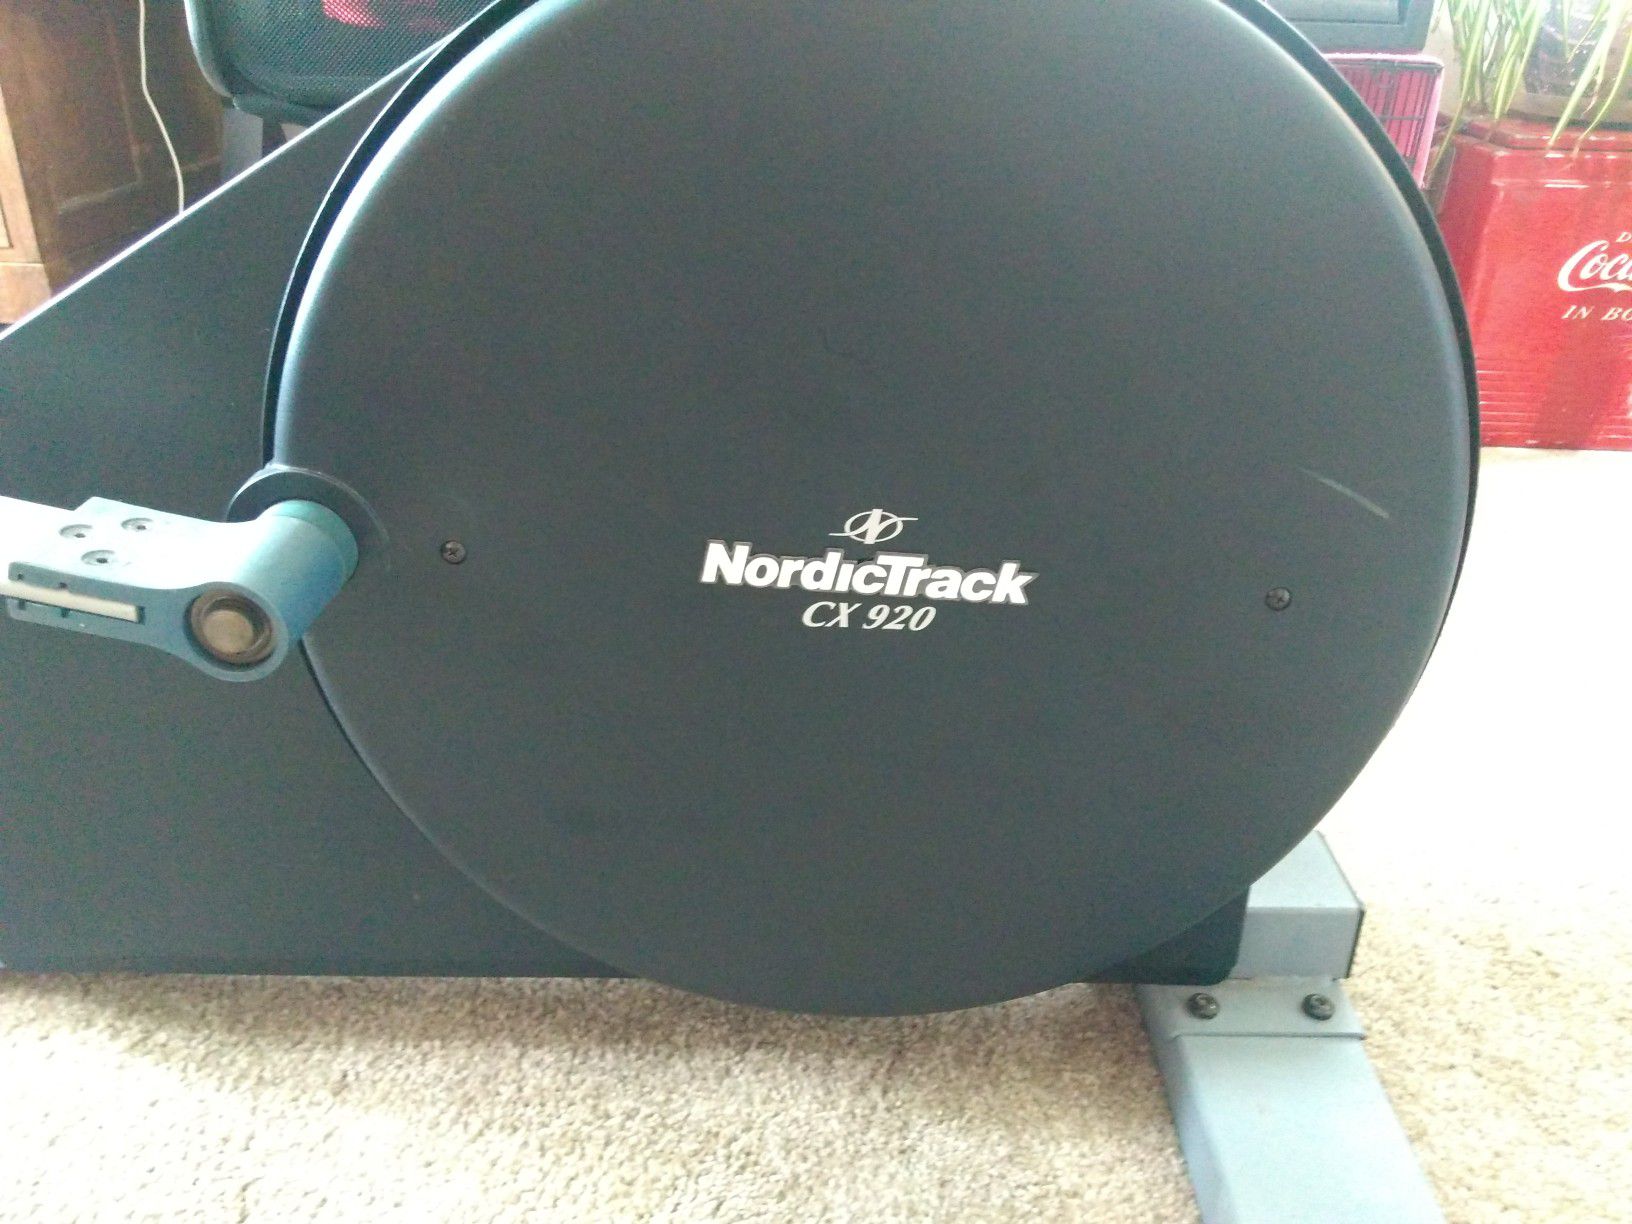 NordicTrack CX-920 elliptical machine $50